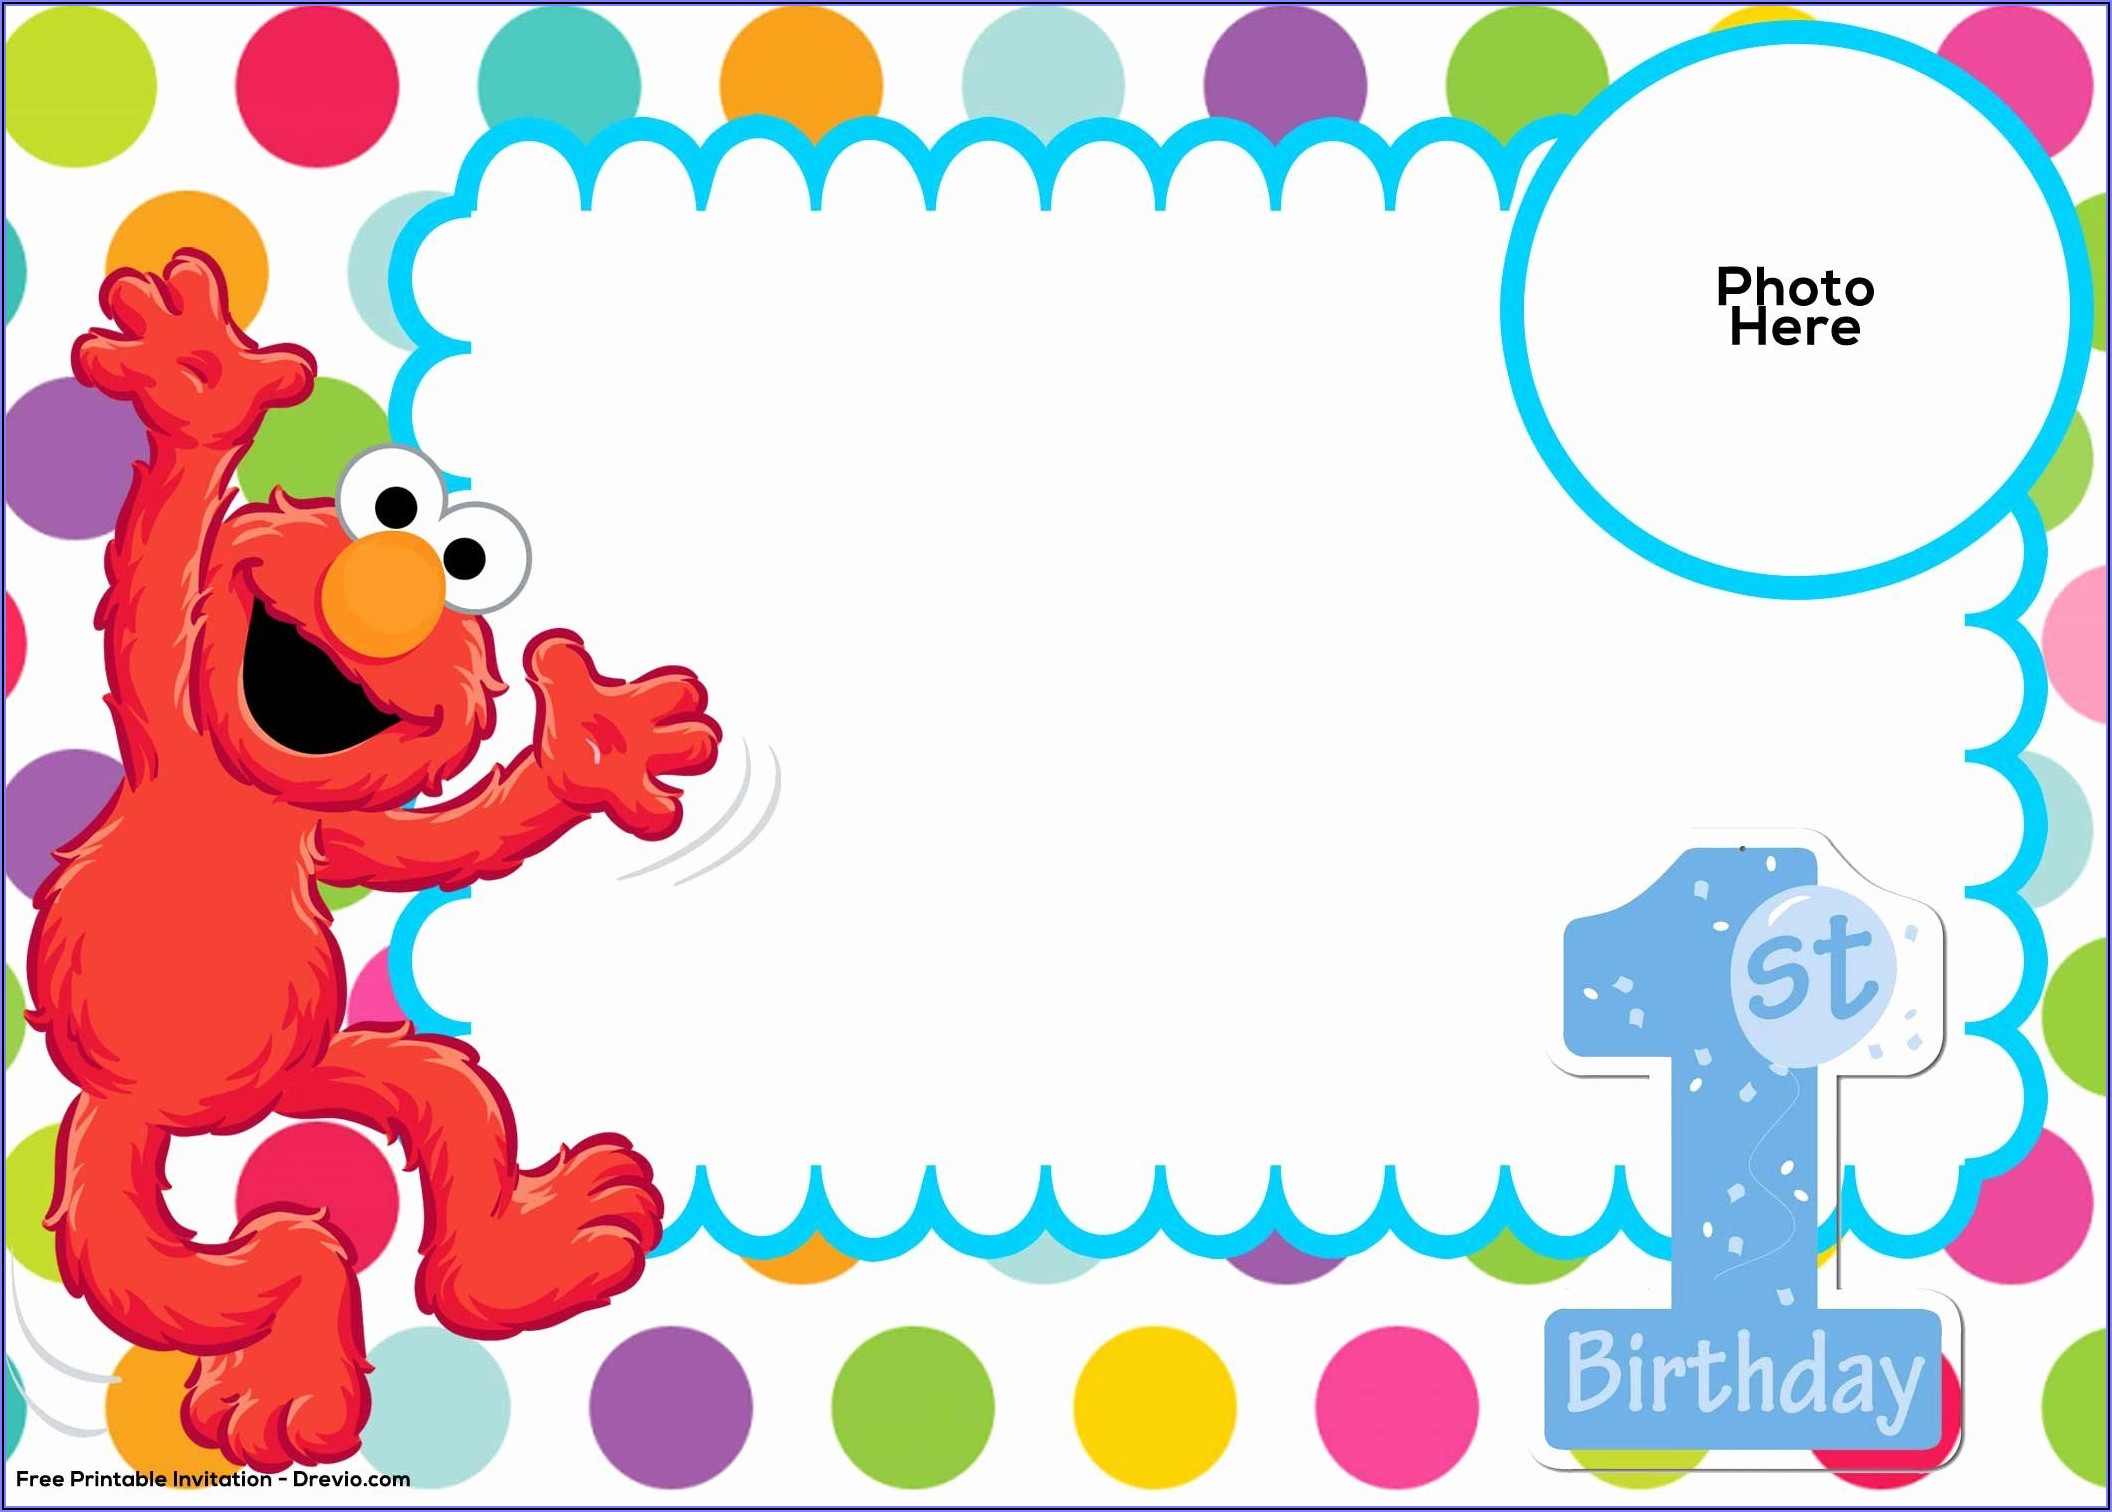 Free Sesame Street Birthday Invitation Templates